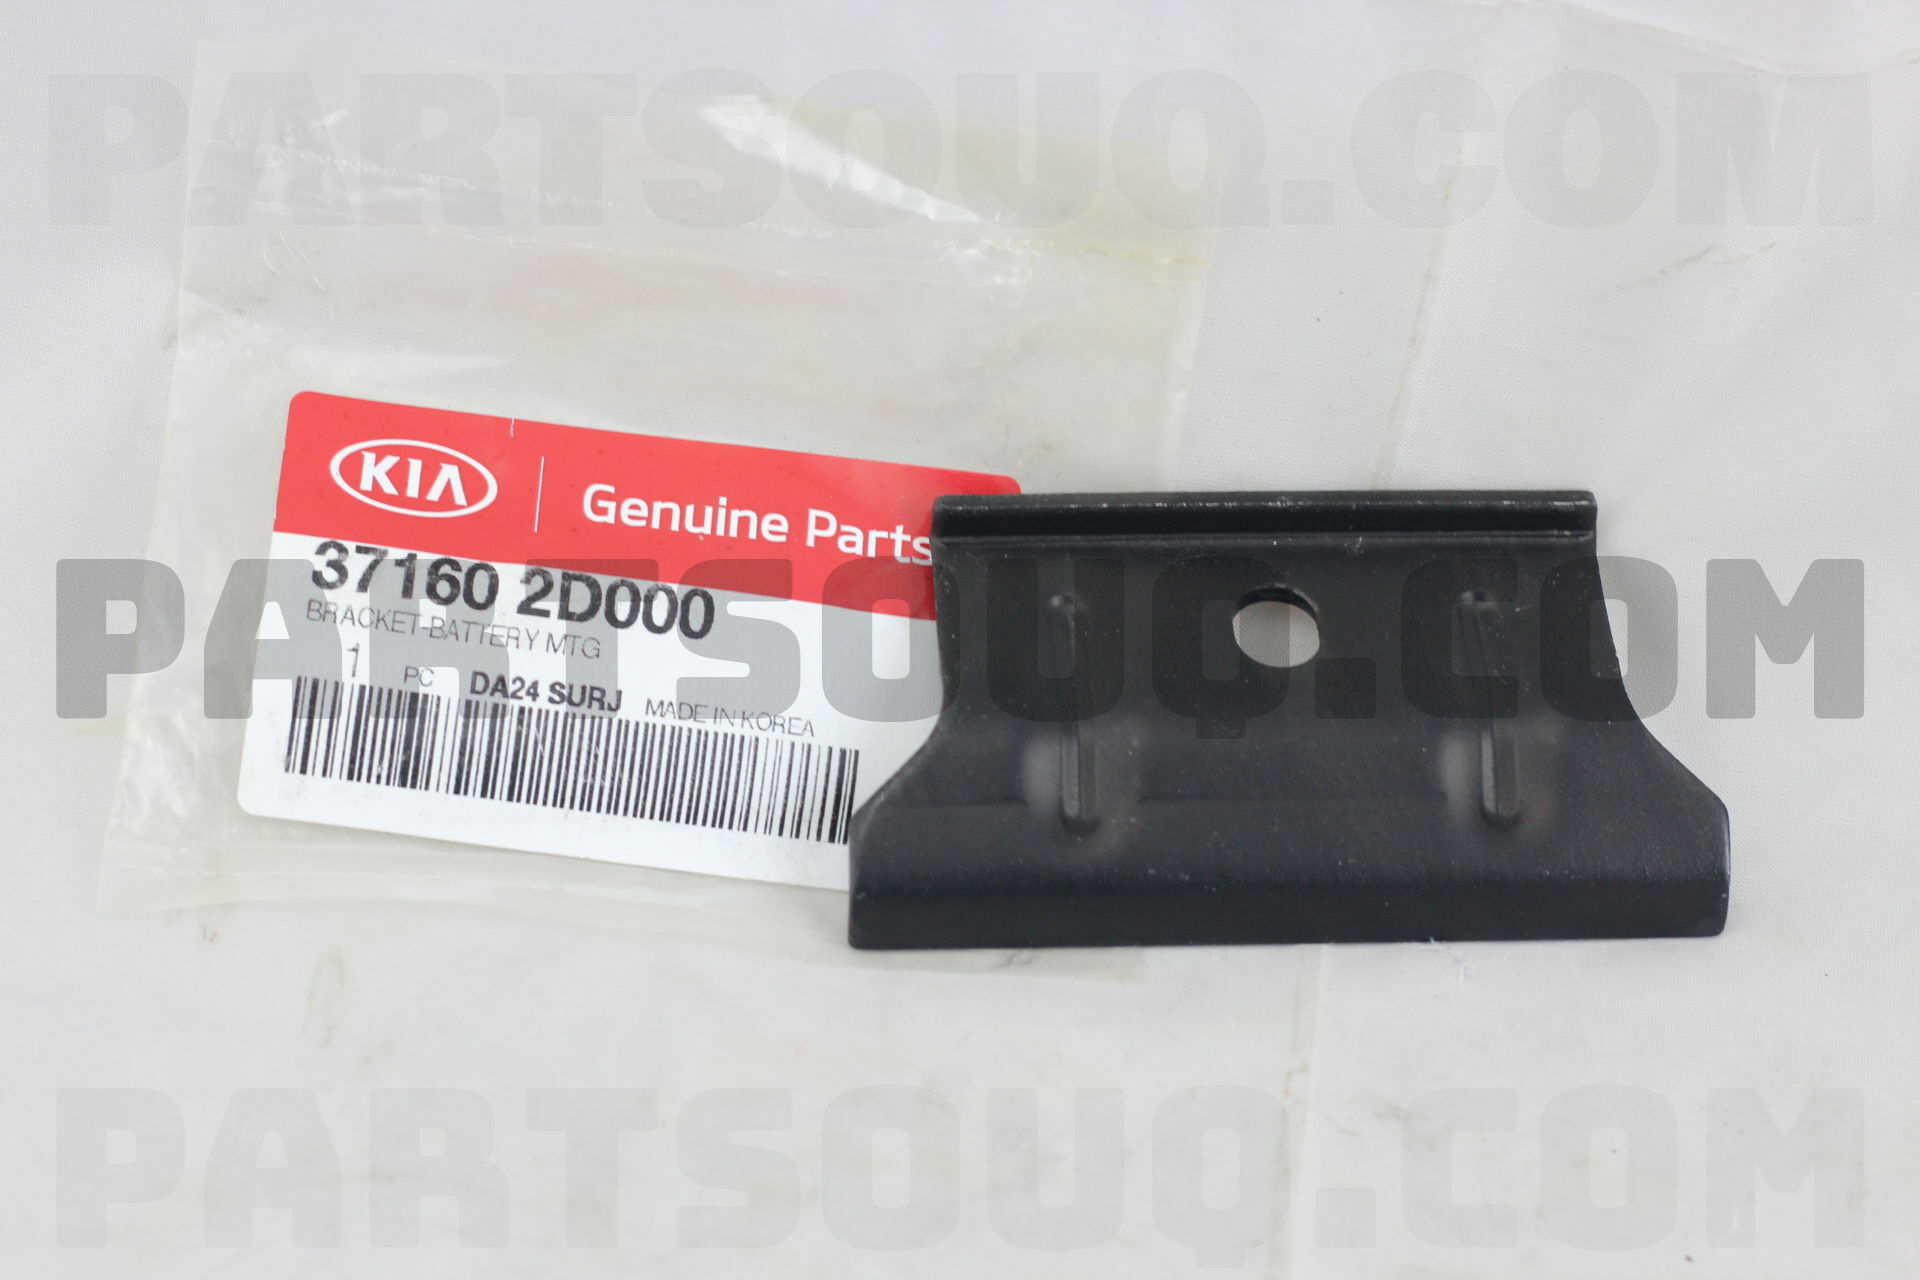 371602D000 for select HYUNDAI KIA models Genuine OEM 37160-2D000 BRACKET-BATTERY MTG 